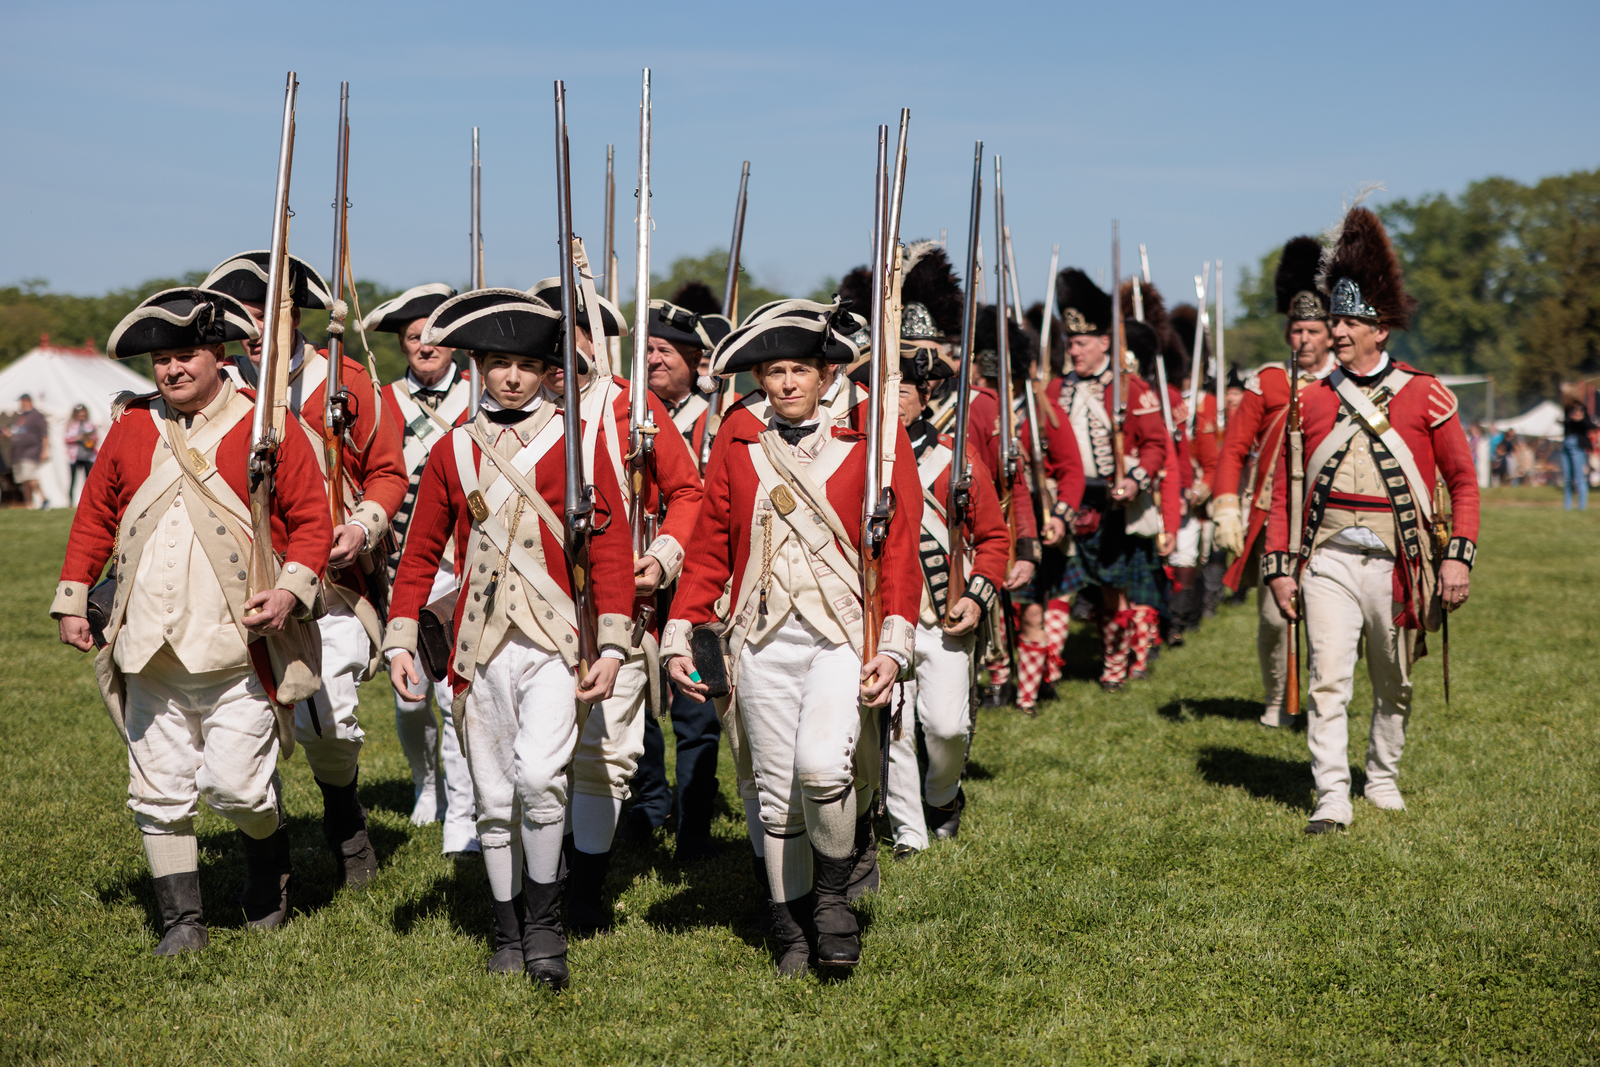 Revolutionary War Weekend at George Washington